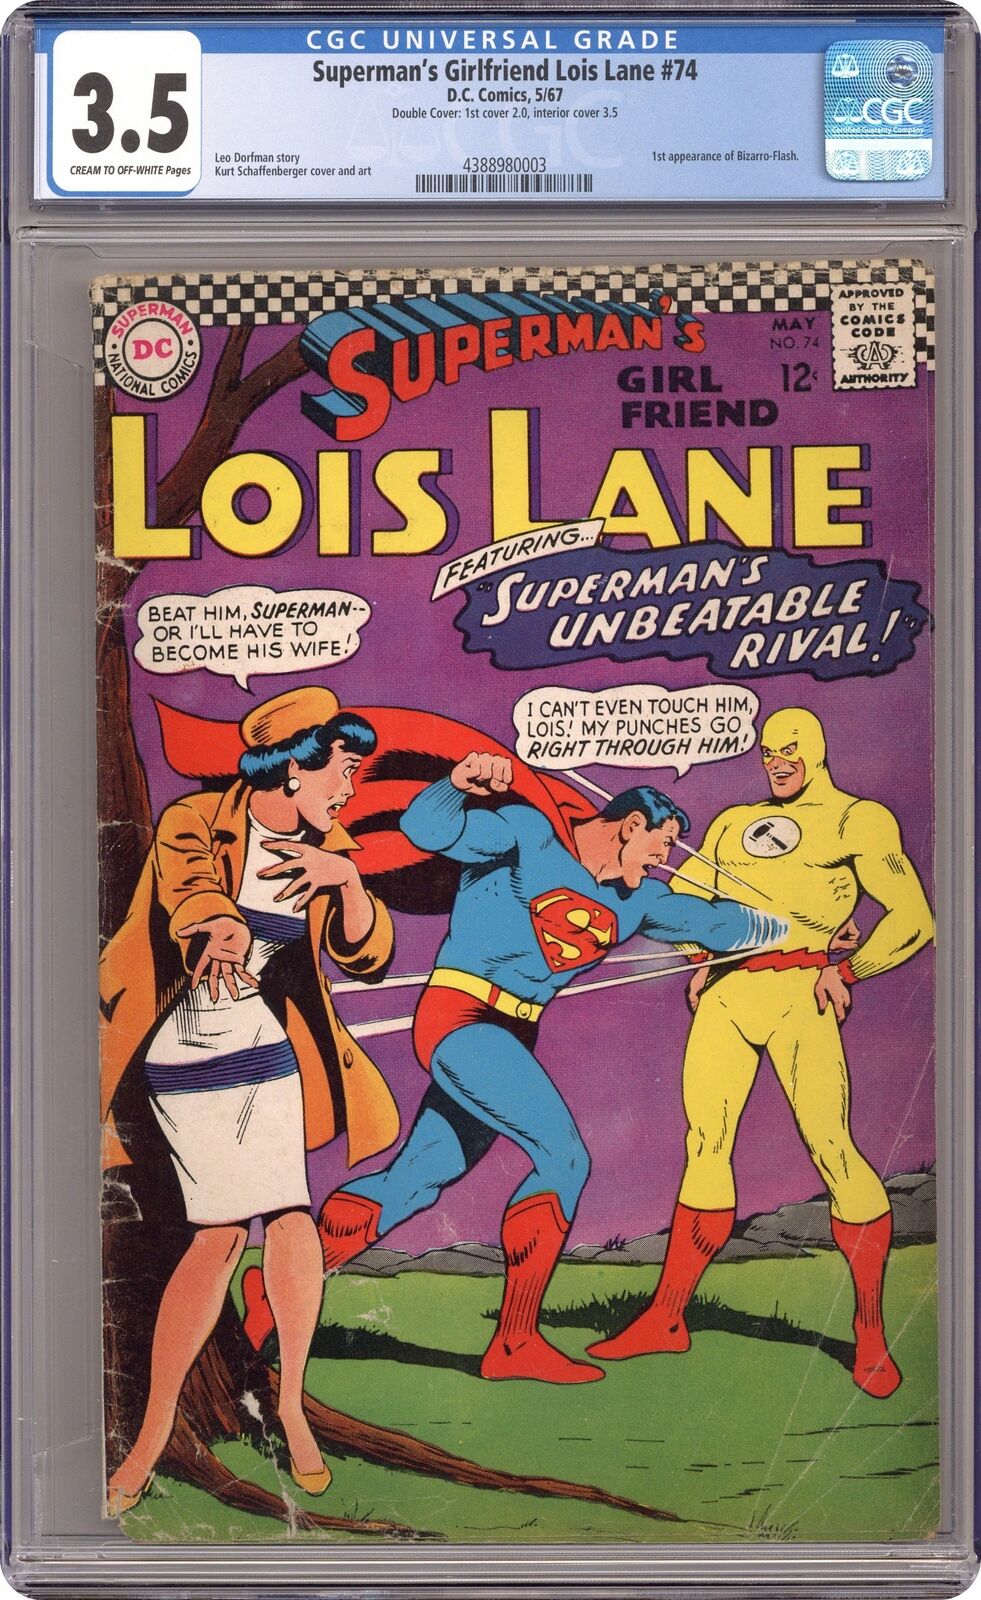 Superman's Girlfriend Lois Lane #74 CGC 3.5 Double Cover 1967 4388980003